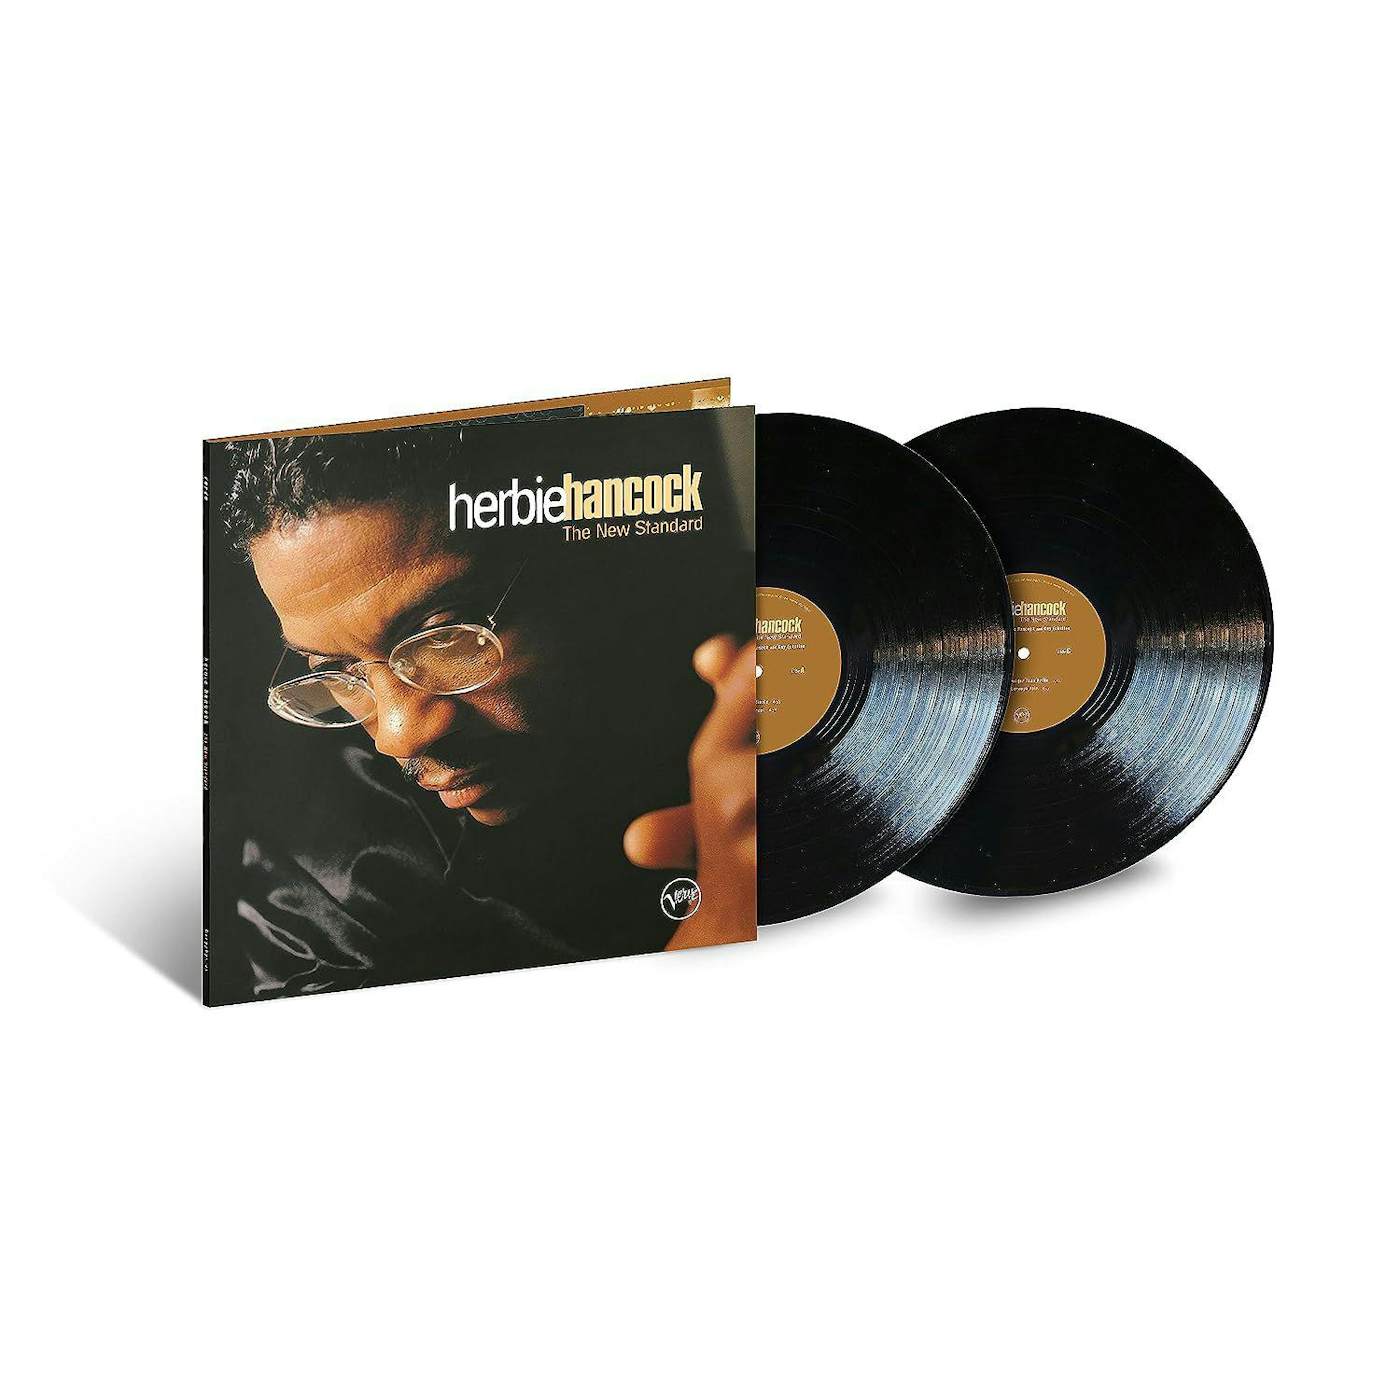 Herbie Hancock New Standard (Verve By Request Series) (2LP) Vinyl Record